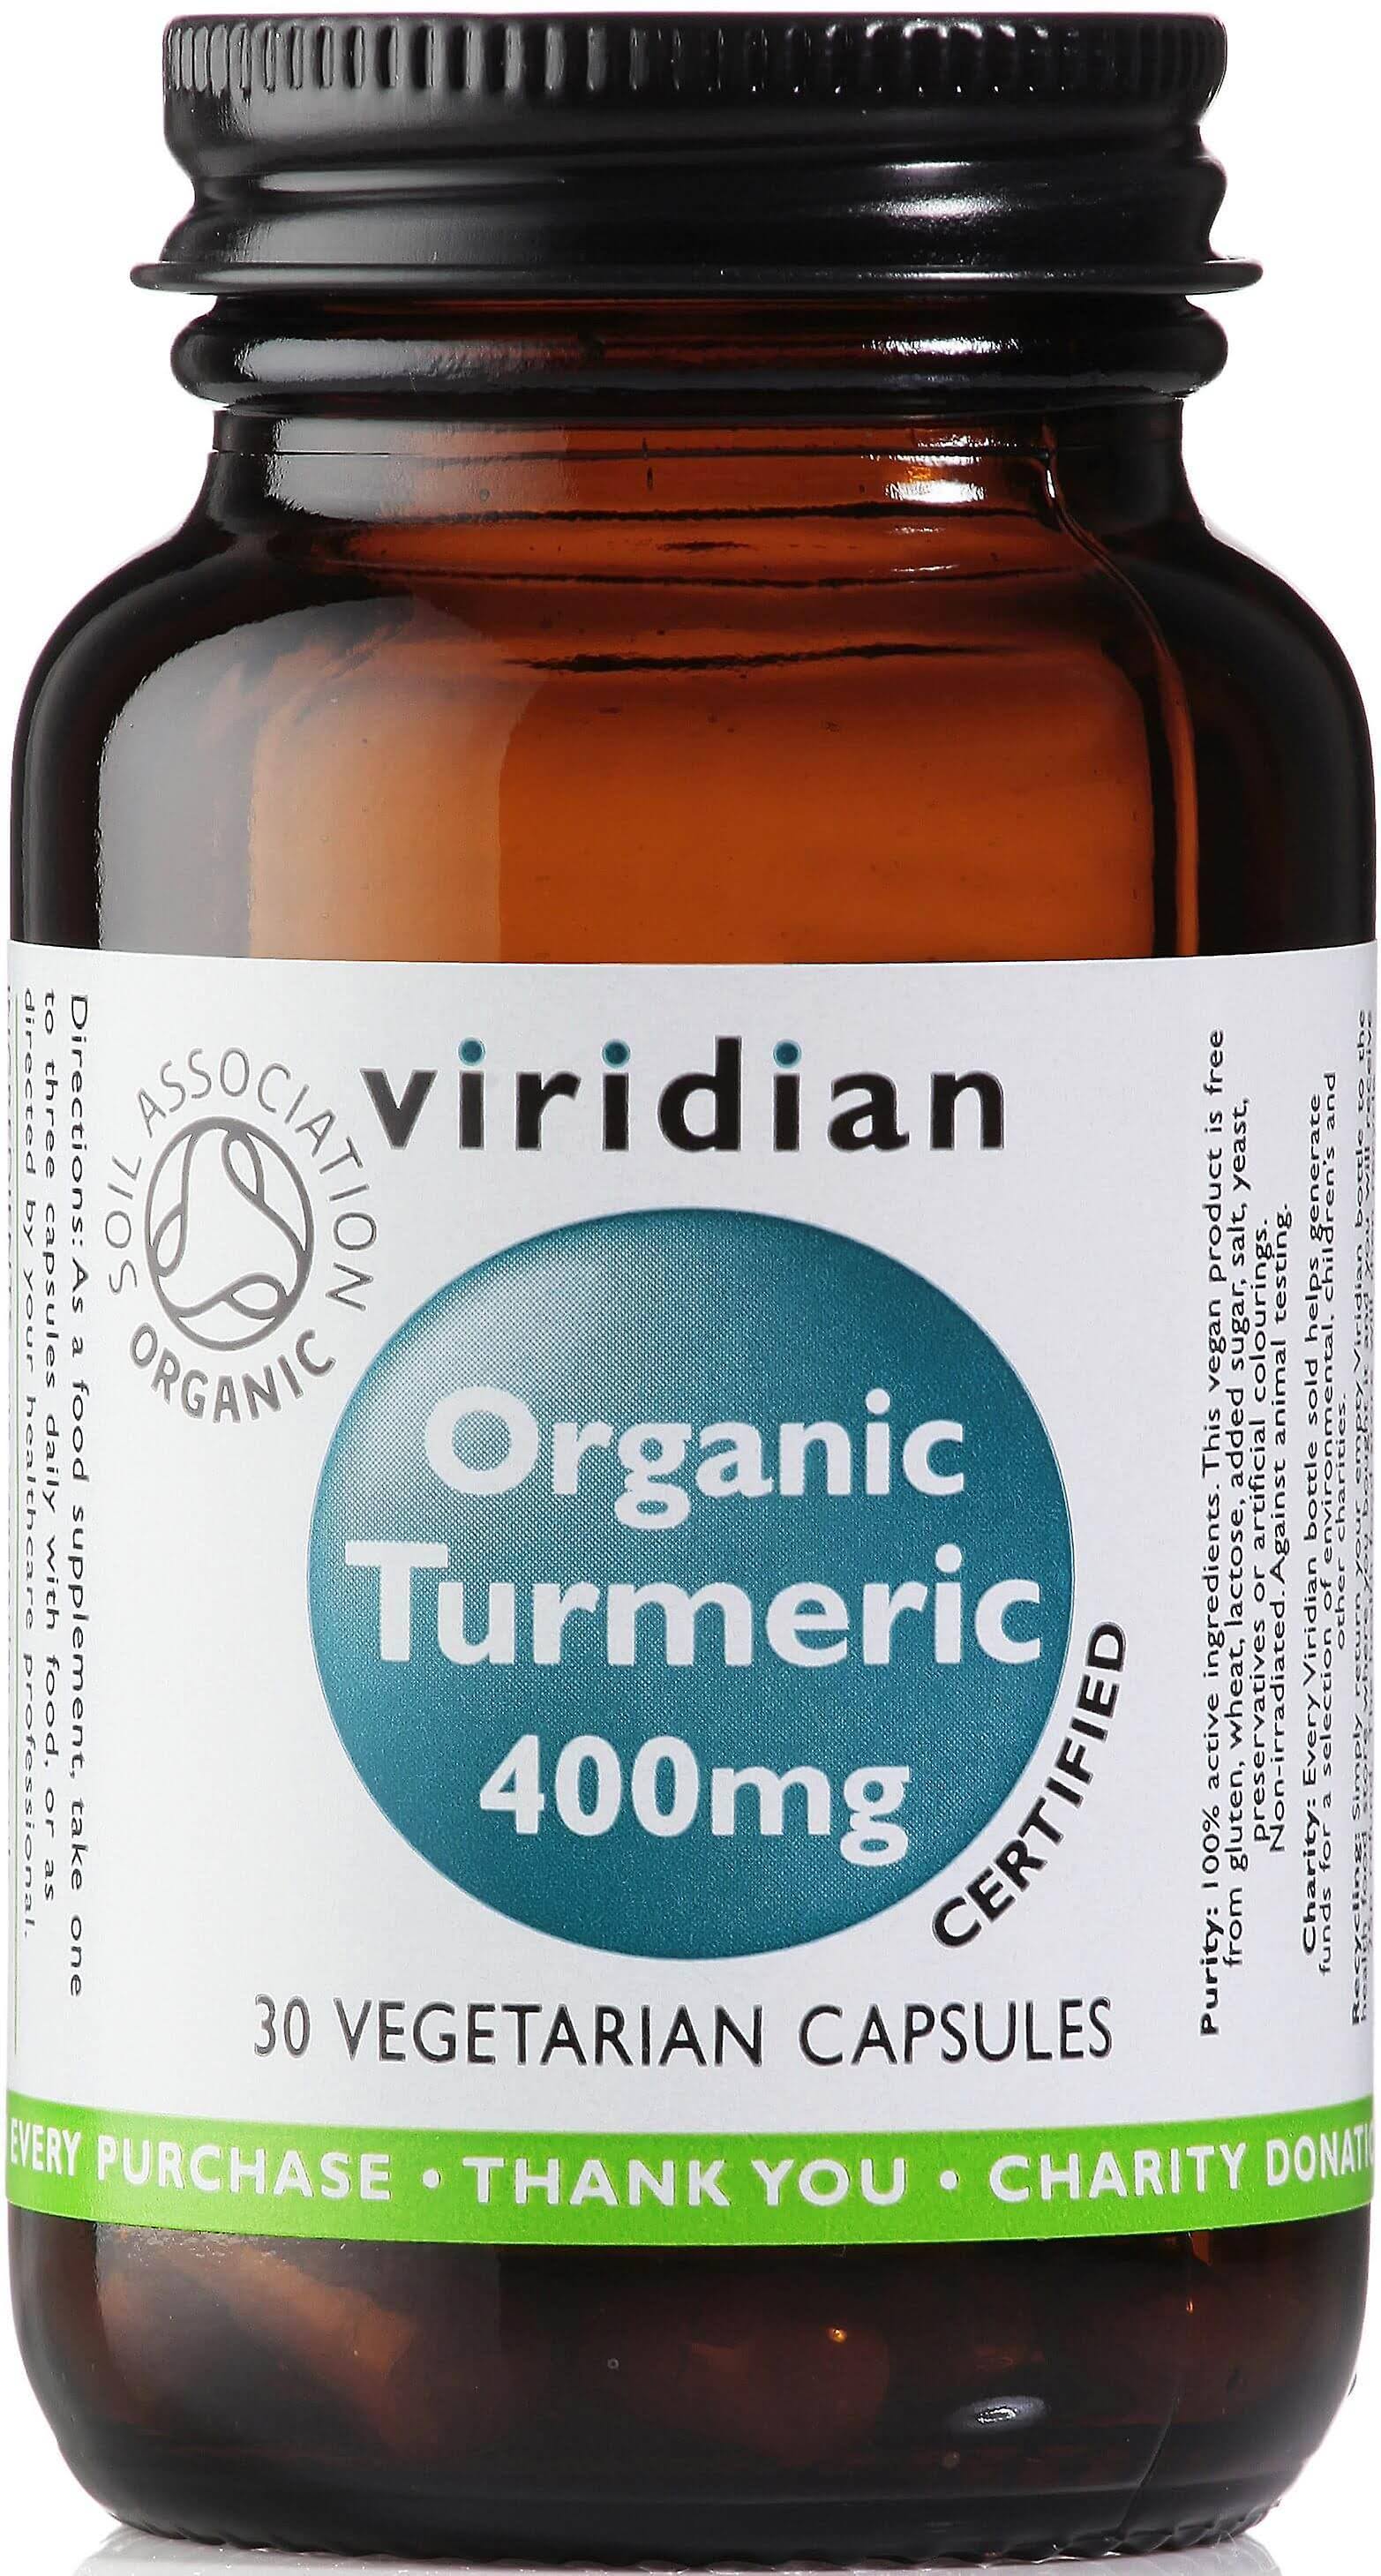 Viridian Organic Turmeric - 400mg, 30 capsules